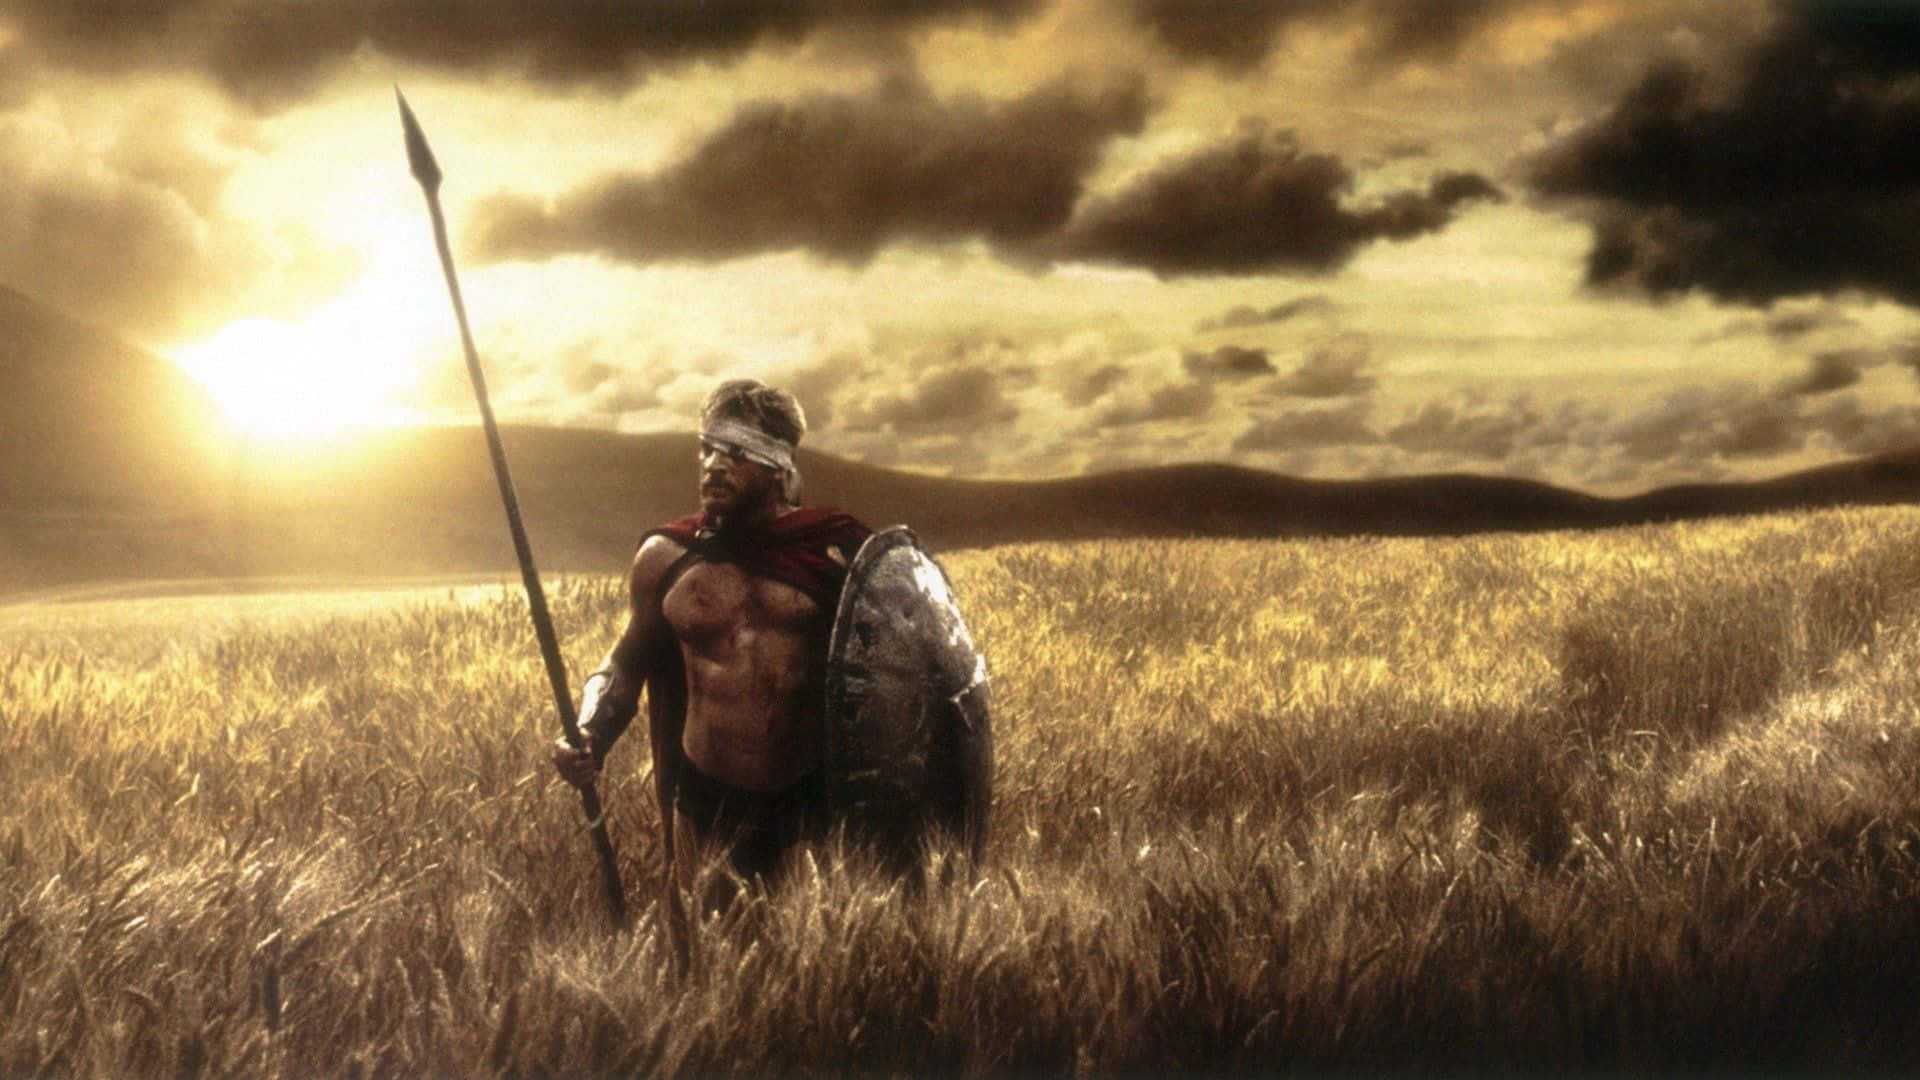 Download Wallpaper 1920x1080 spartans, warriors, defense, shields, lance,  300 Full HD 1080p HD Background | Sparta wallpaper, Spartan warrior, 300  movie